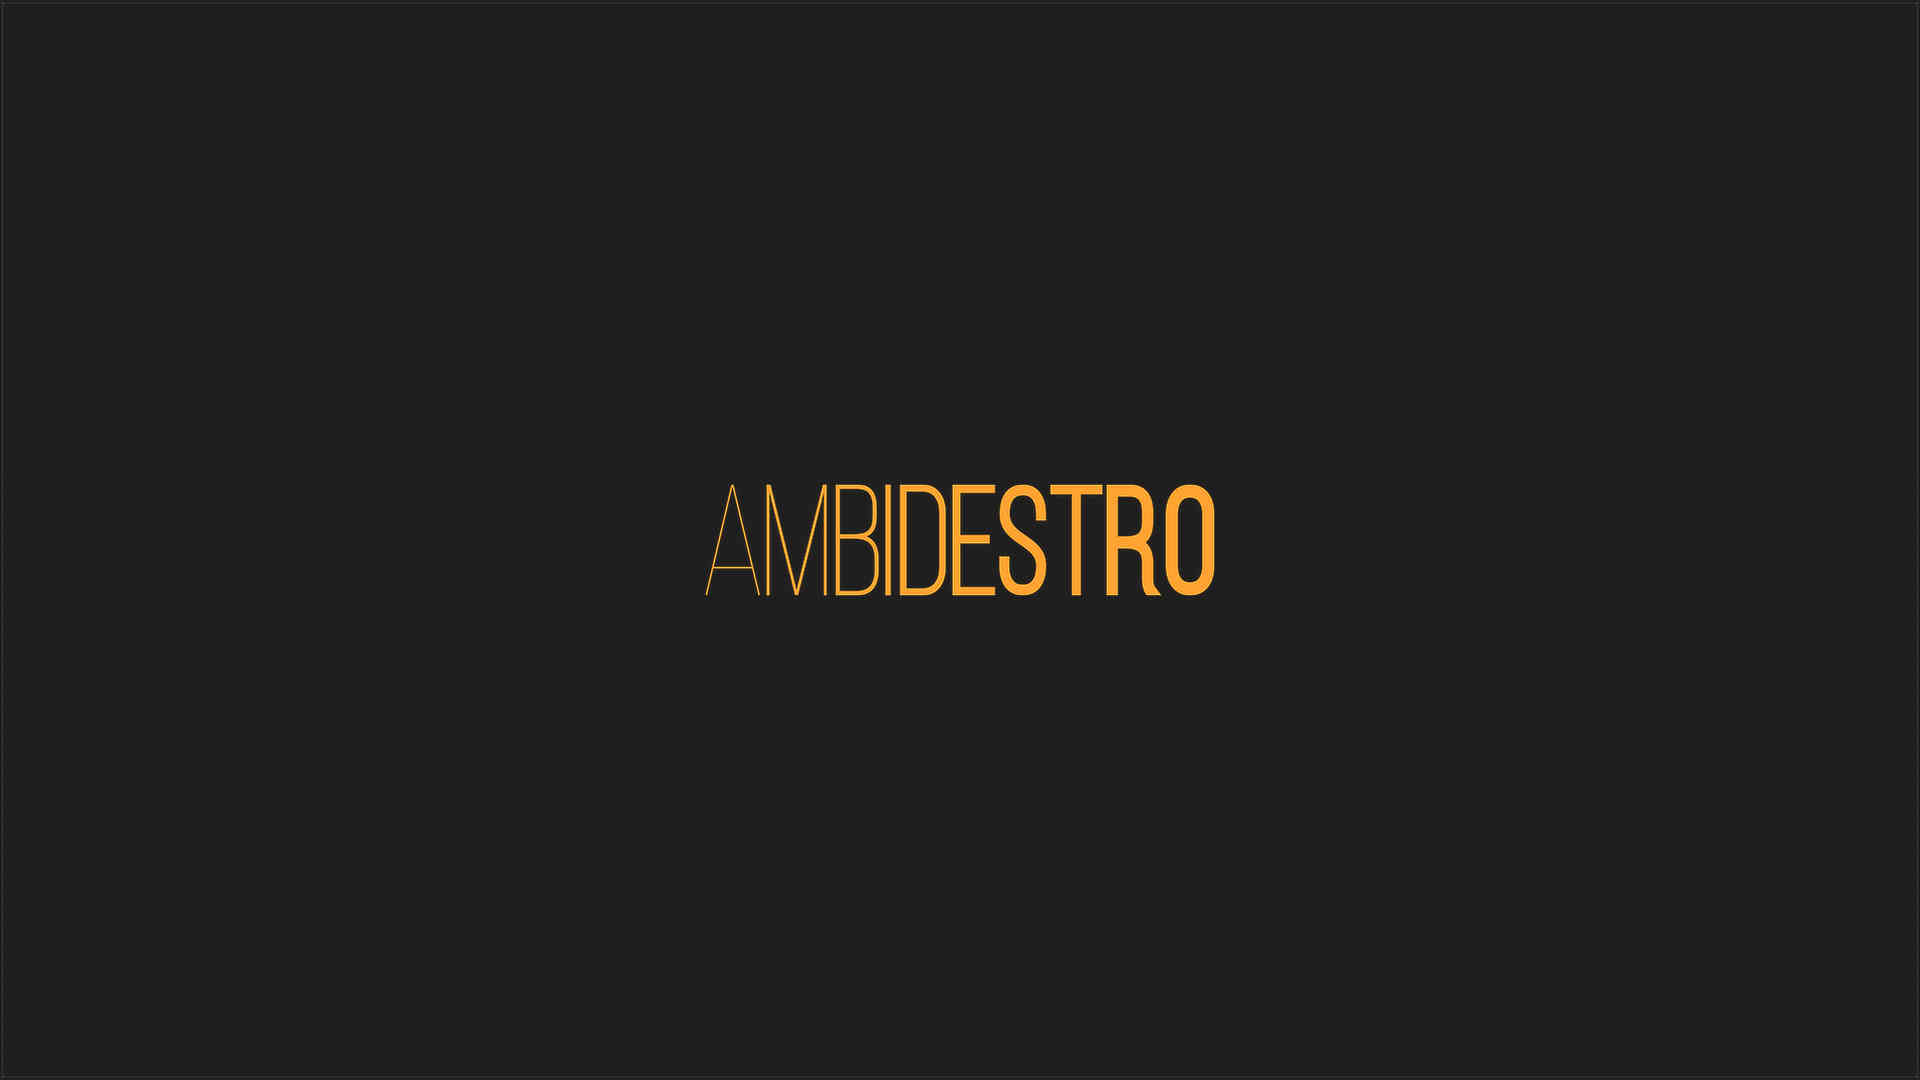 Trailer_Ambidestro_20191208